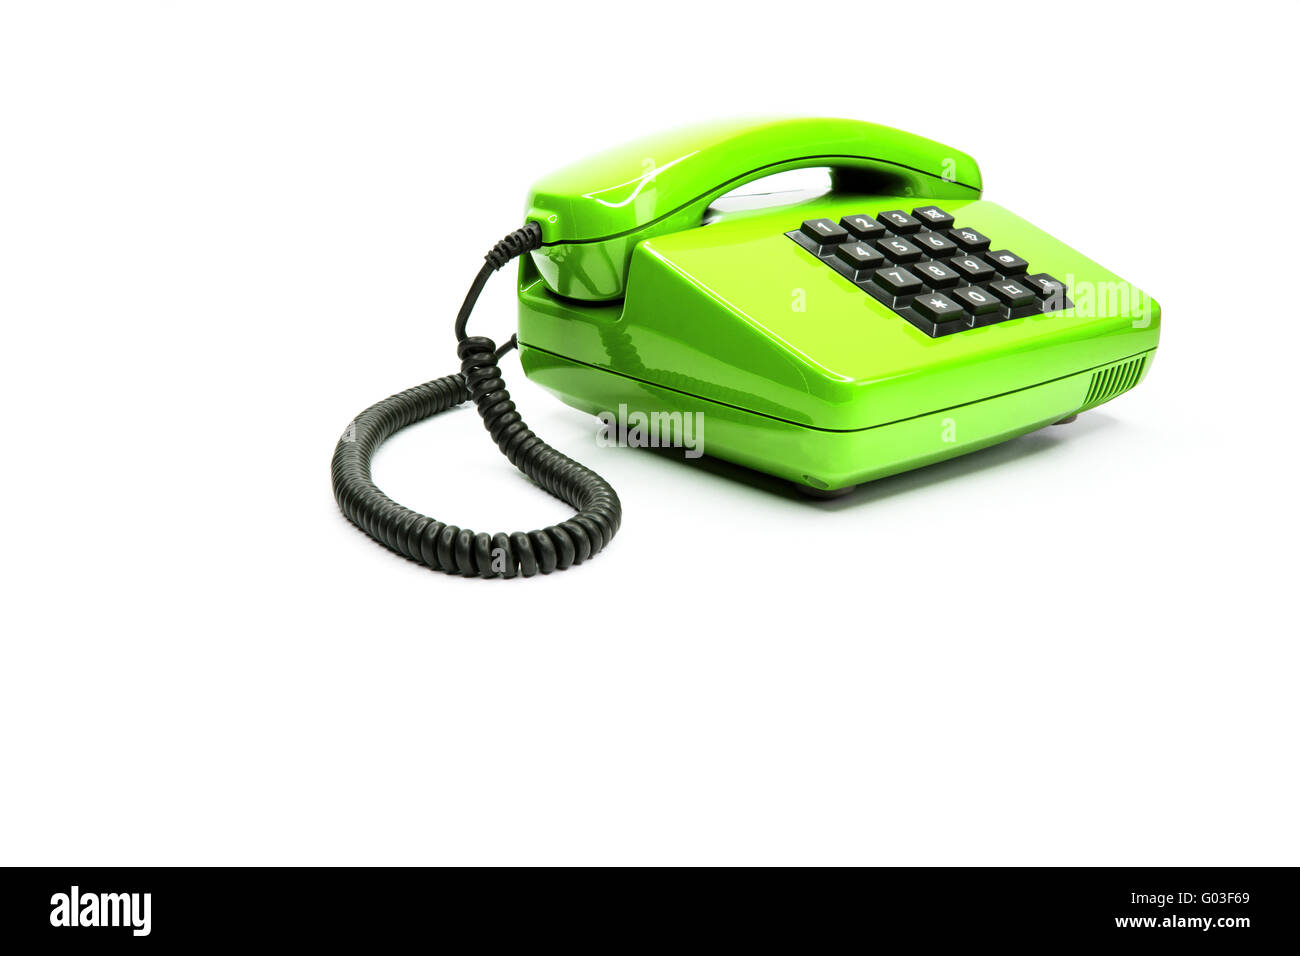 Classic telephone from the eighties Stock Photo